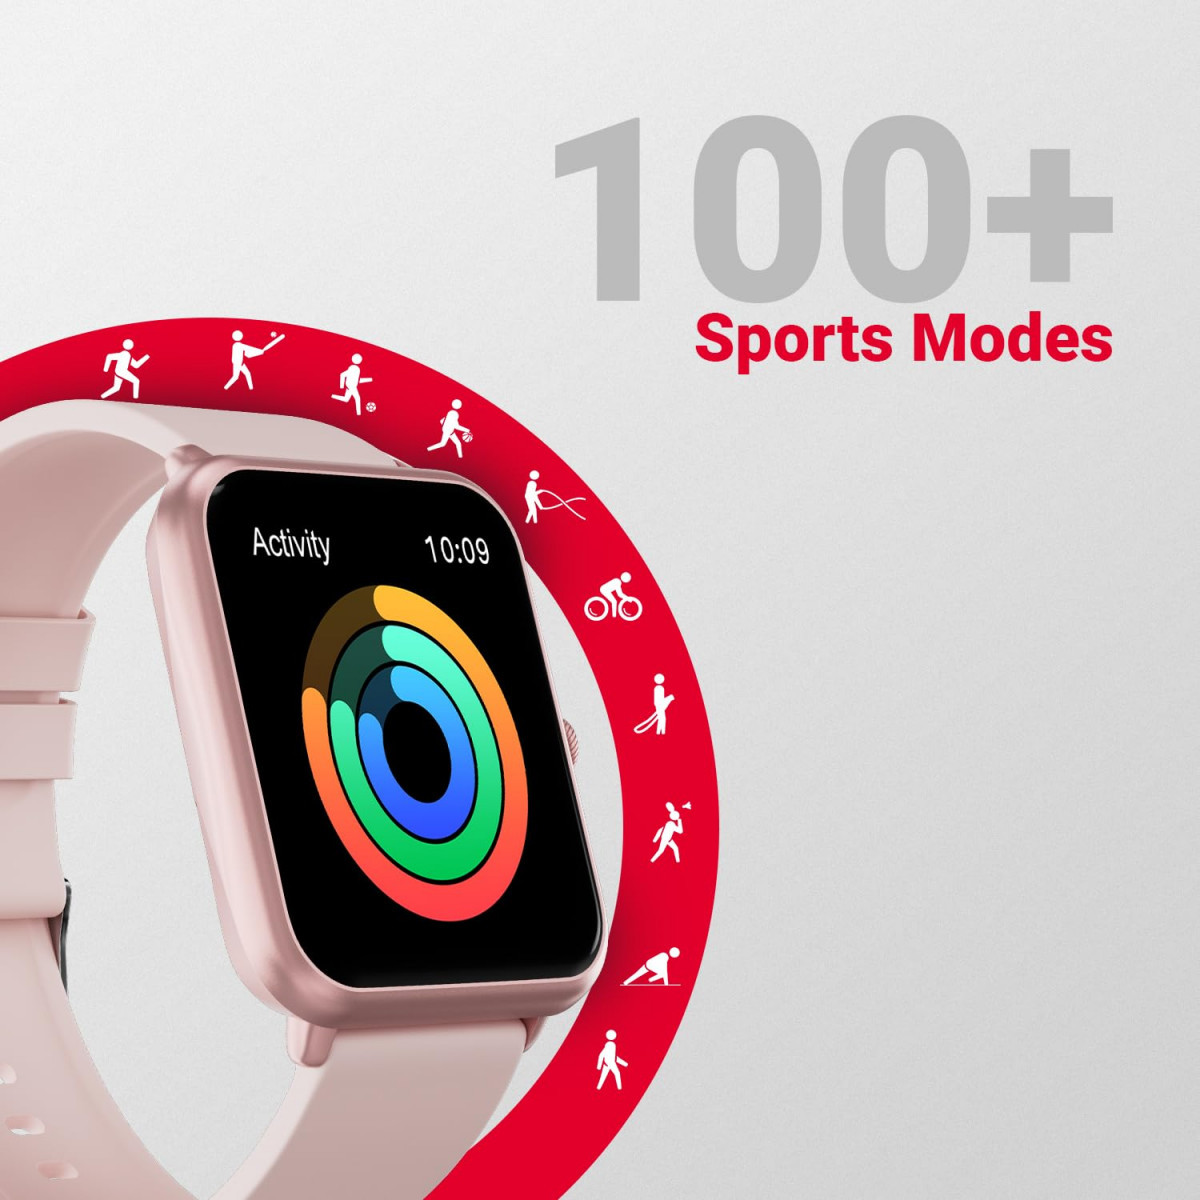 Fire-Boltt Ninja Call Pro Plus 183 Smart Watch with Bluetooth Calling